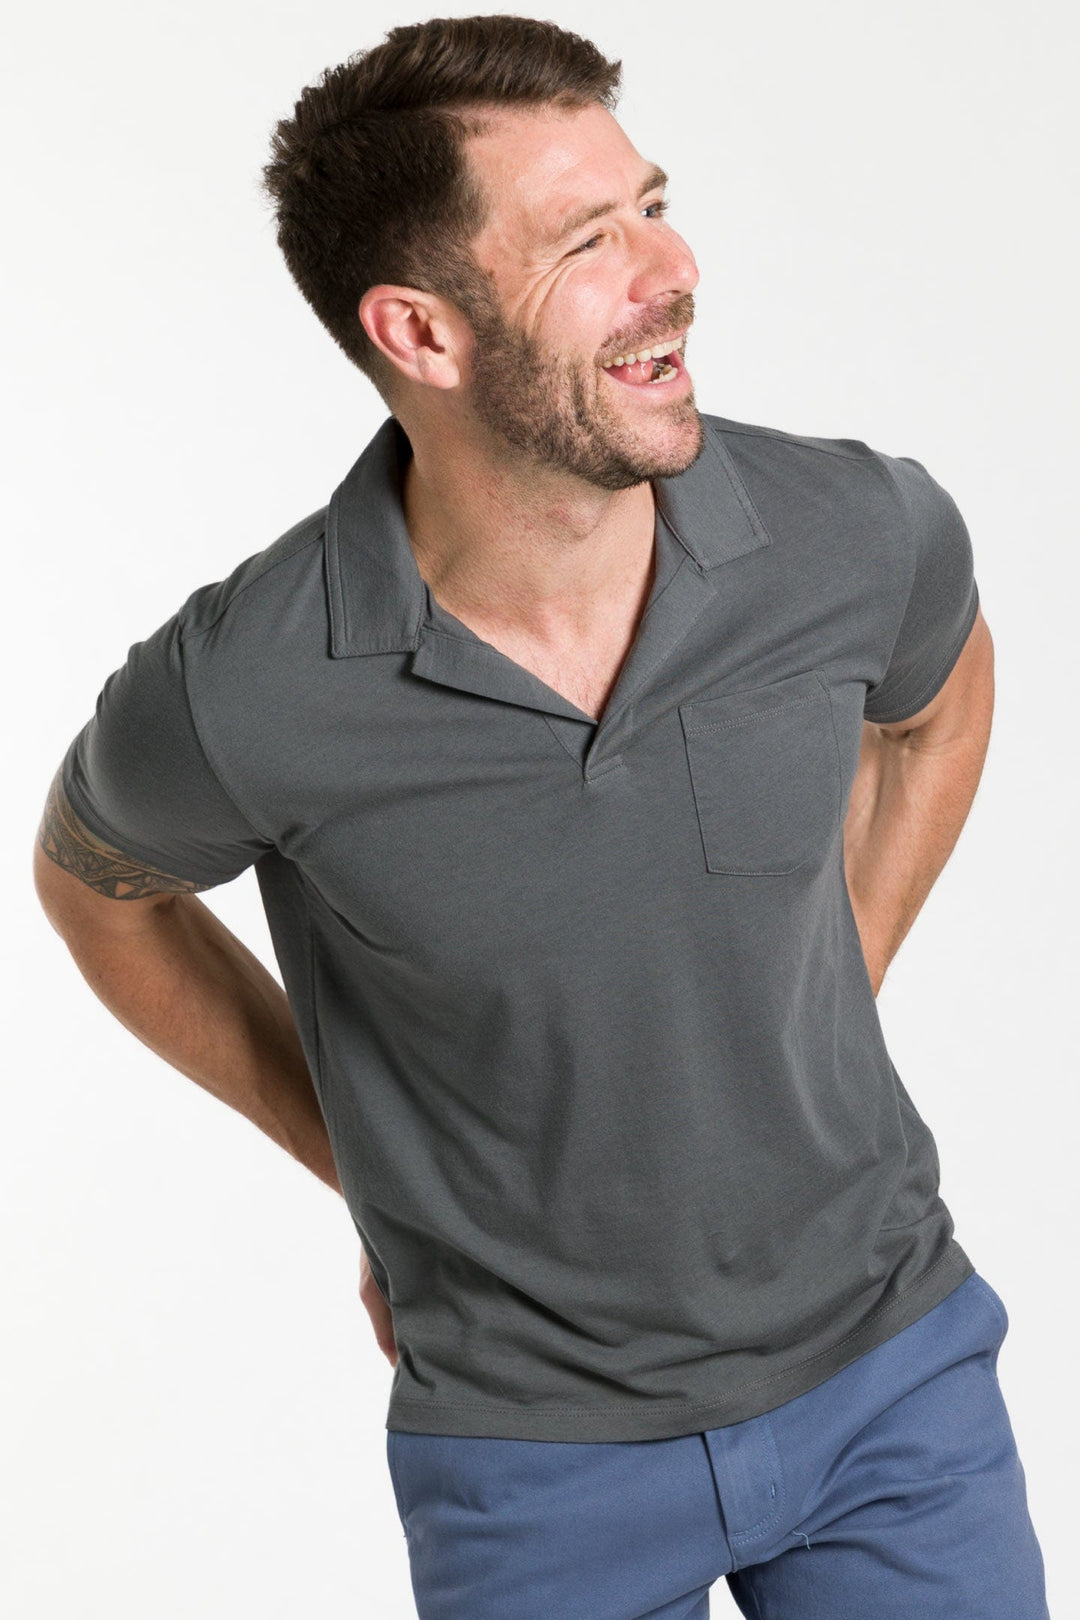 Buy Charcoal T-Shirt Polo for Short Men | Ash & Erie   T-Shirt Polo